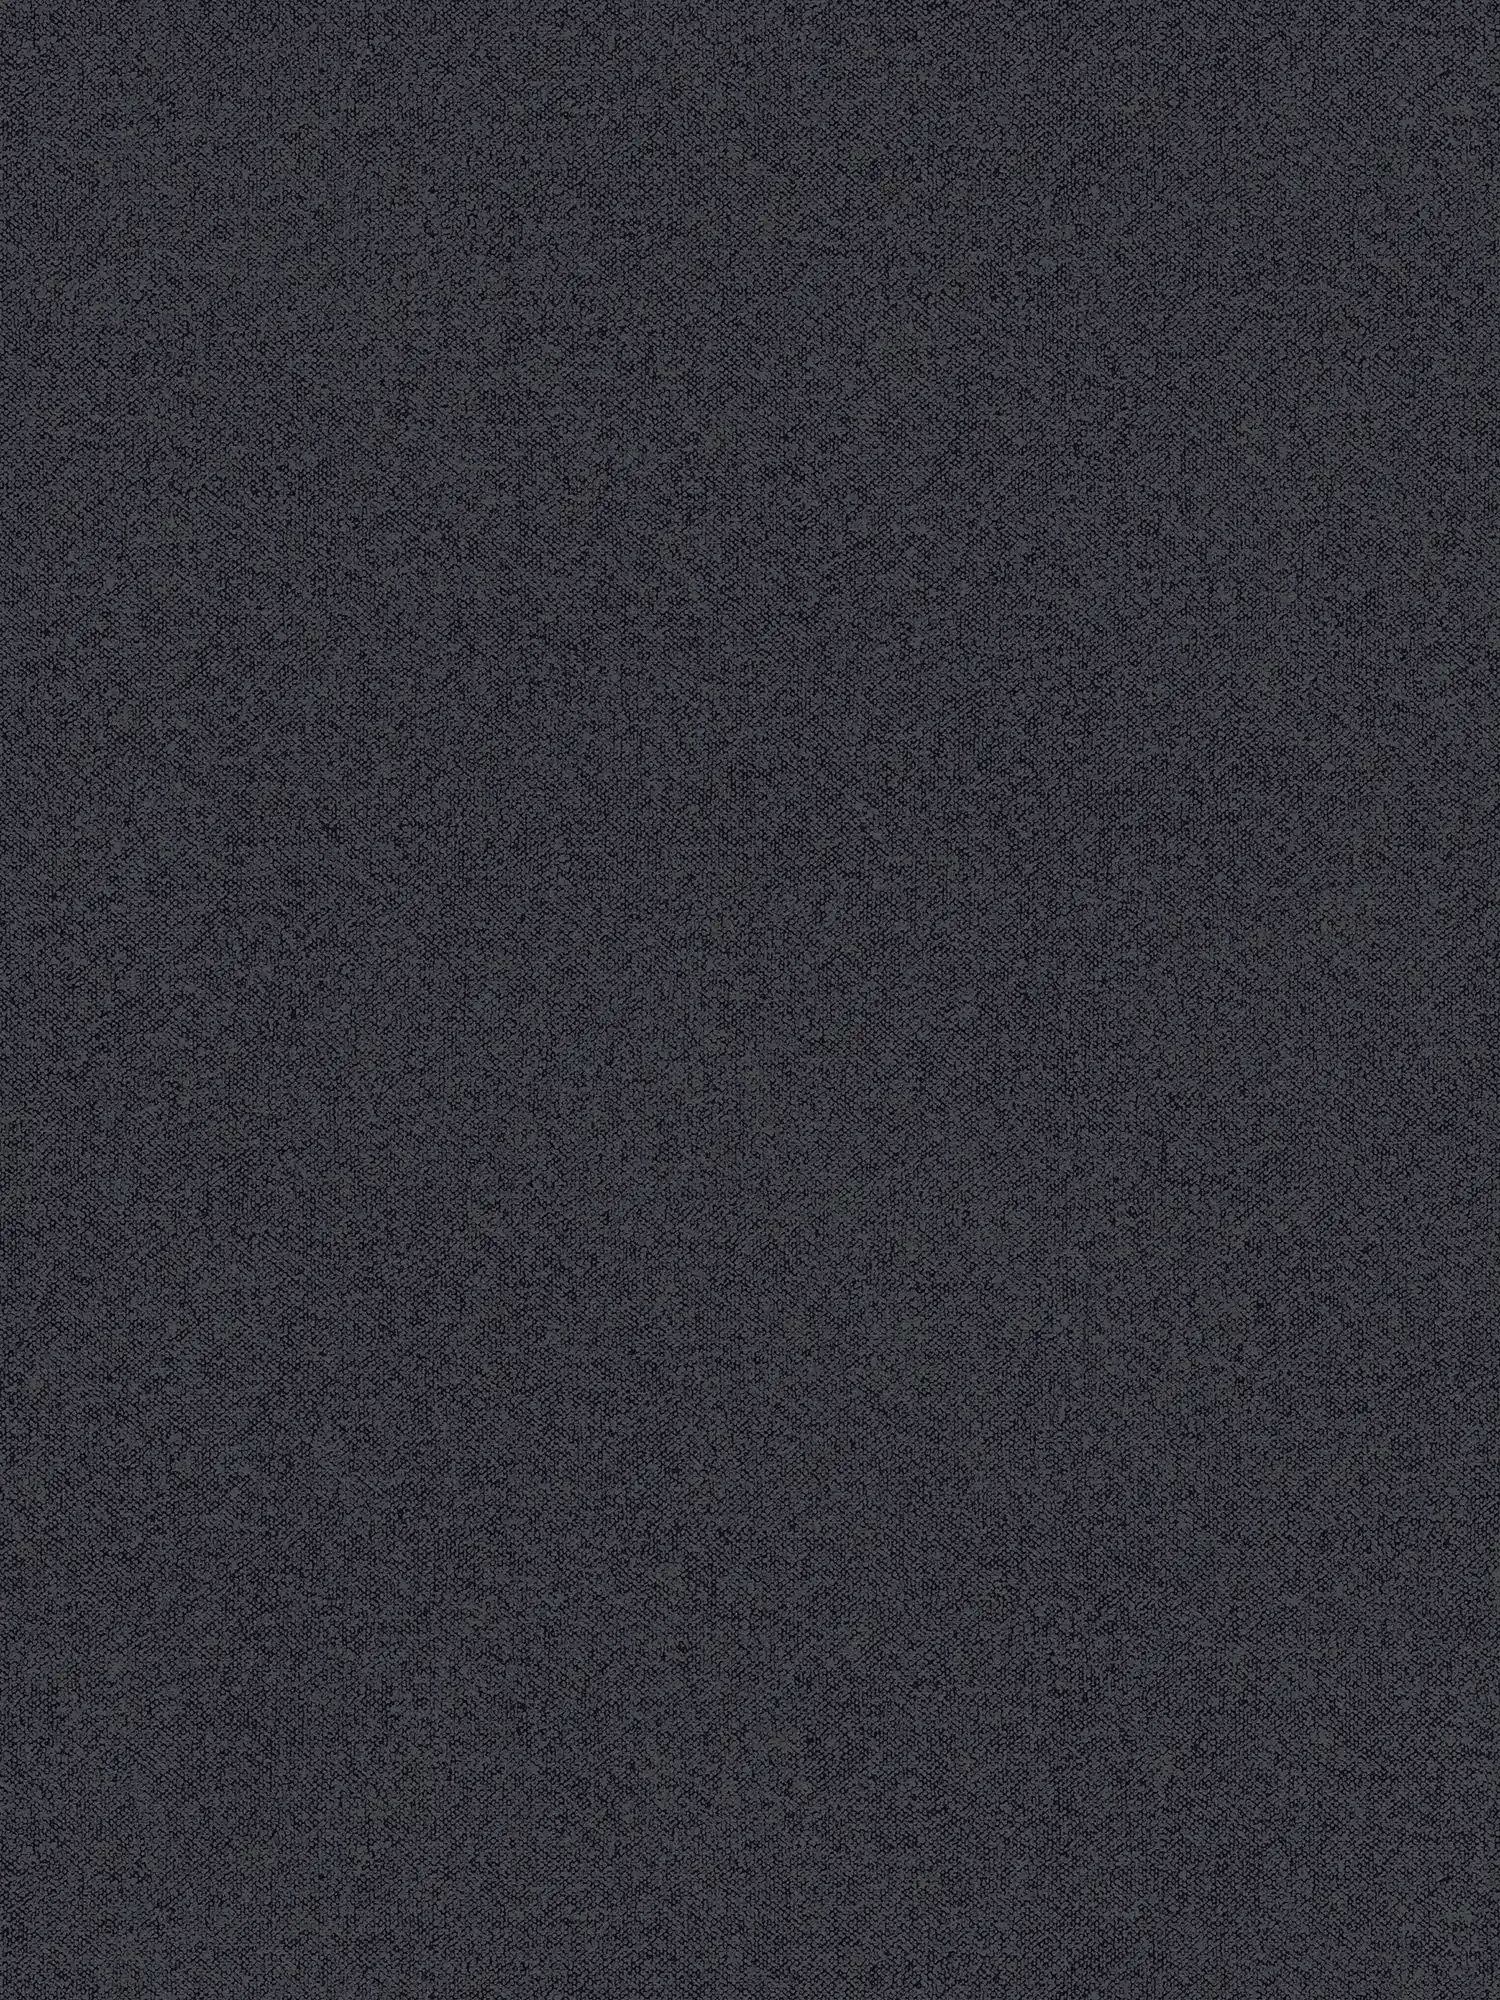 Textured wallpaper plain with linen look - black, grey
